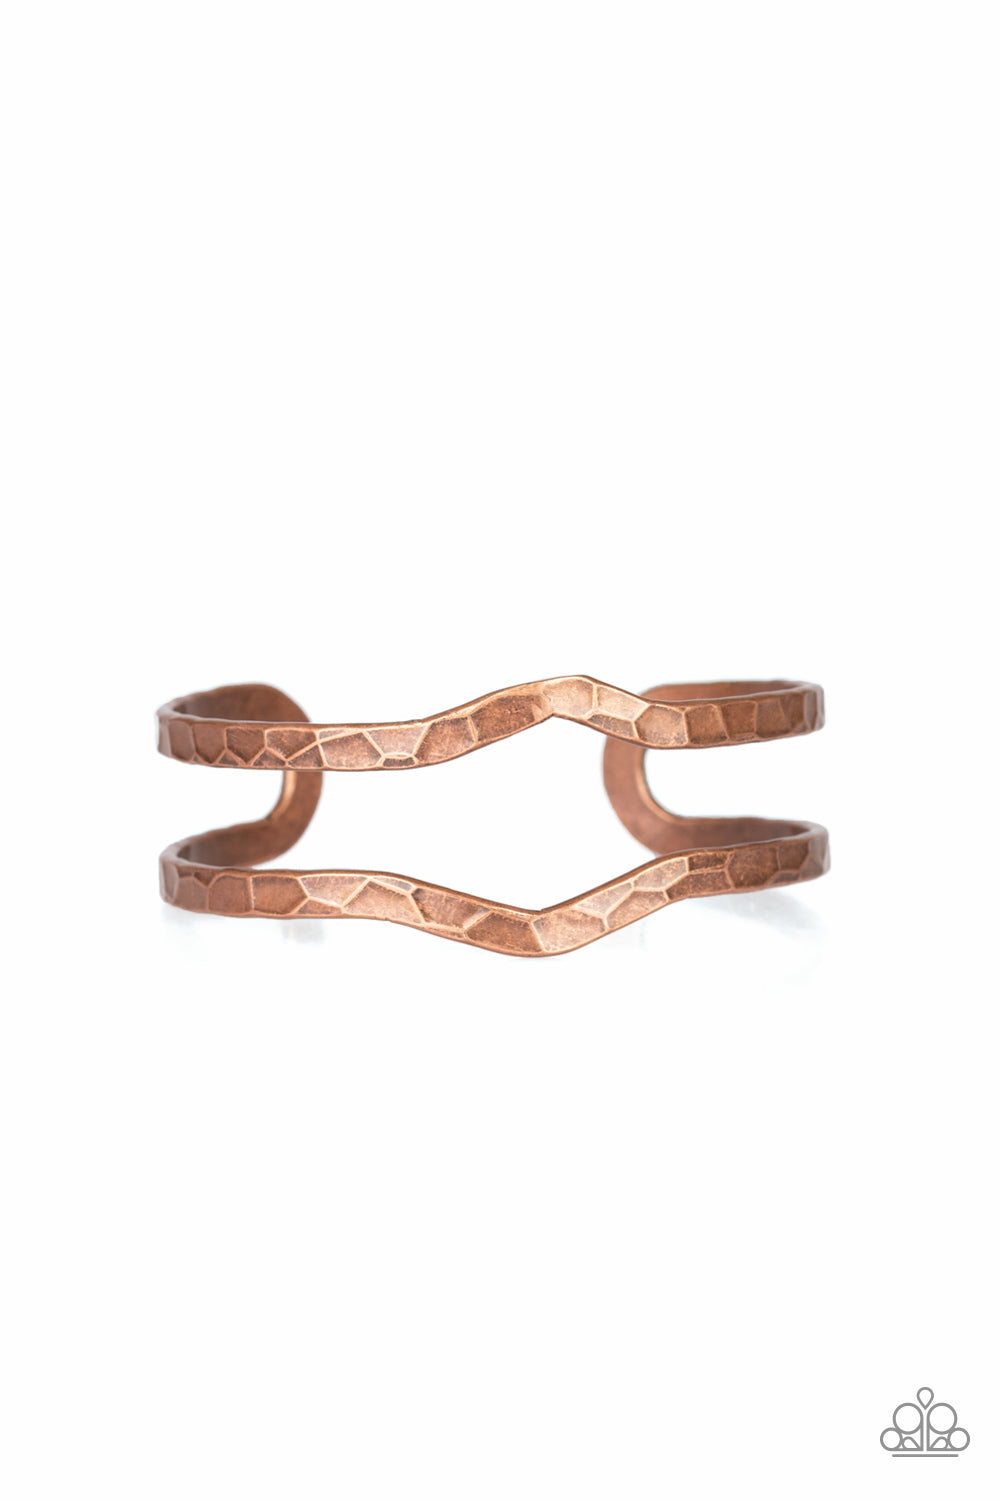 Paparazzi Accessories - Highland Heiress - Copper Bracelet - Alies Bling Bar